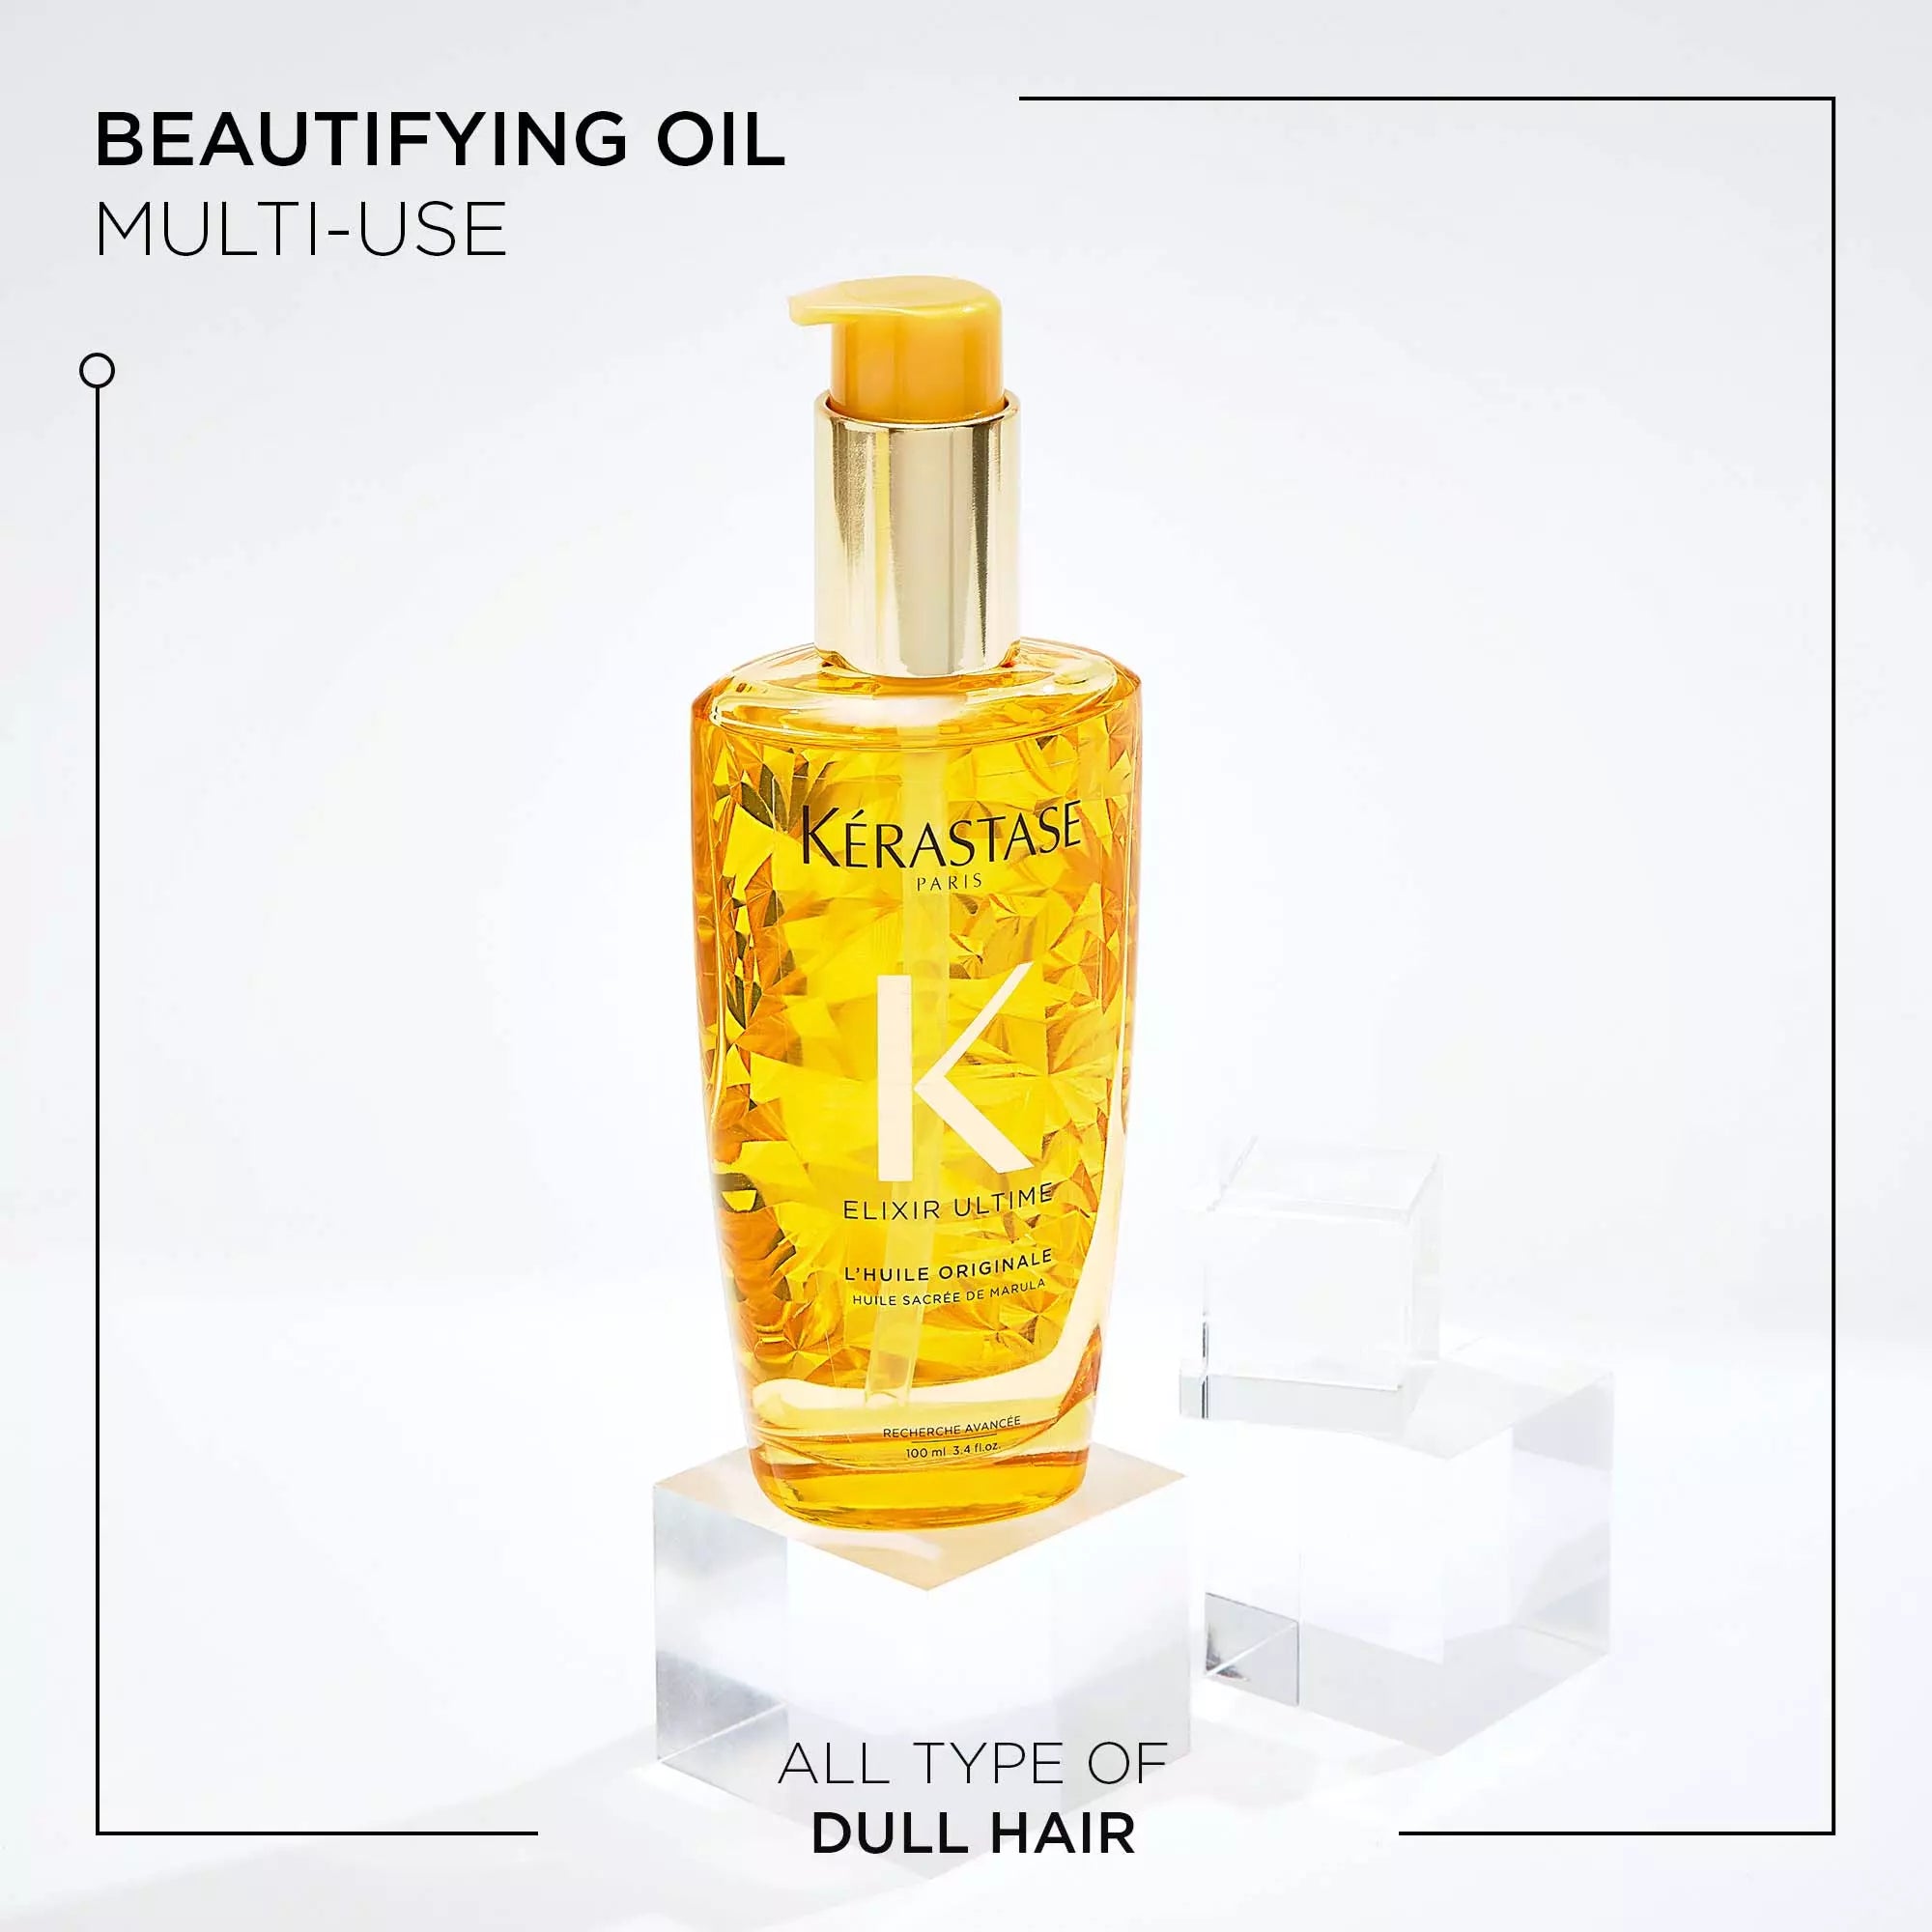 Elixir Ultime L'Huile Originale hair oil 100ML - www.Hudonline.no 